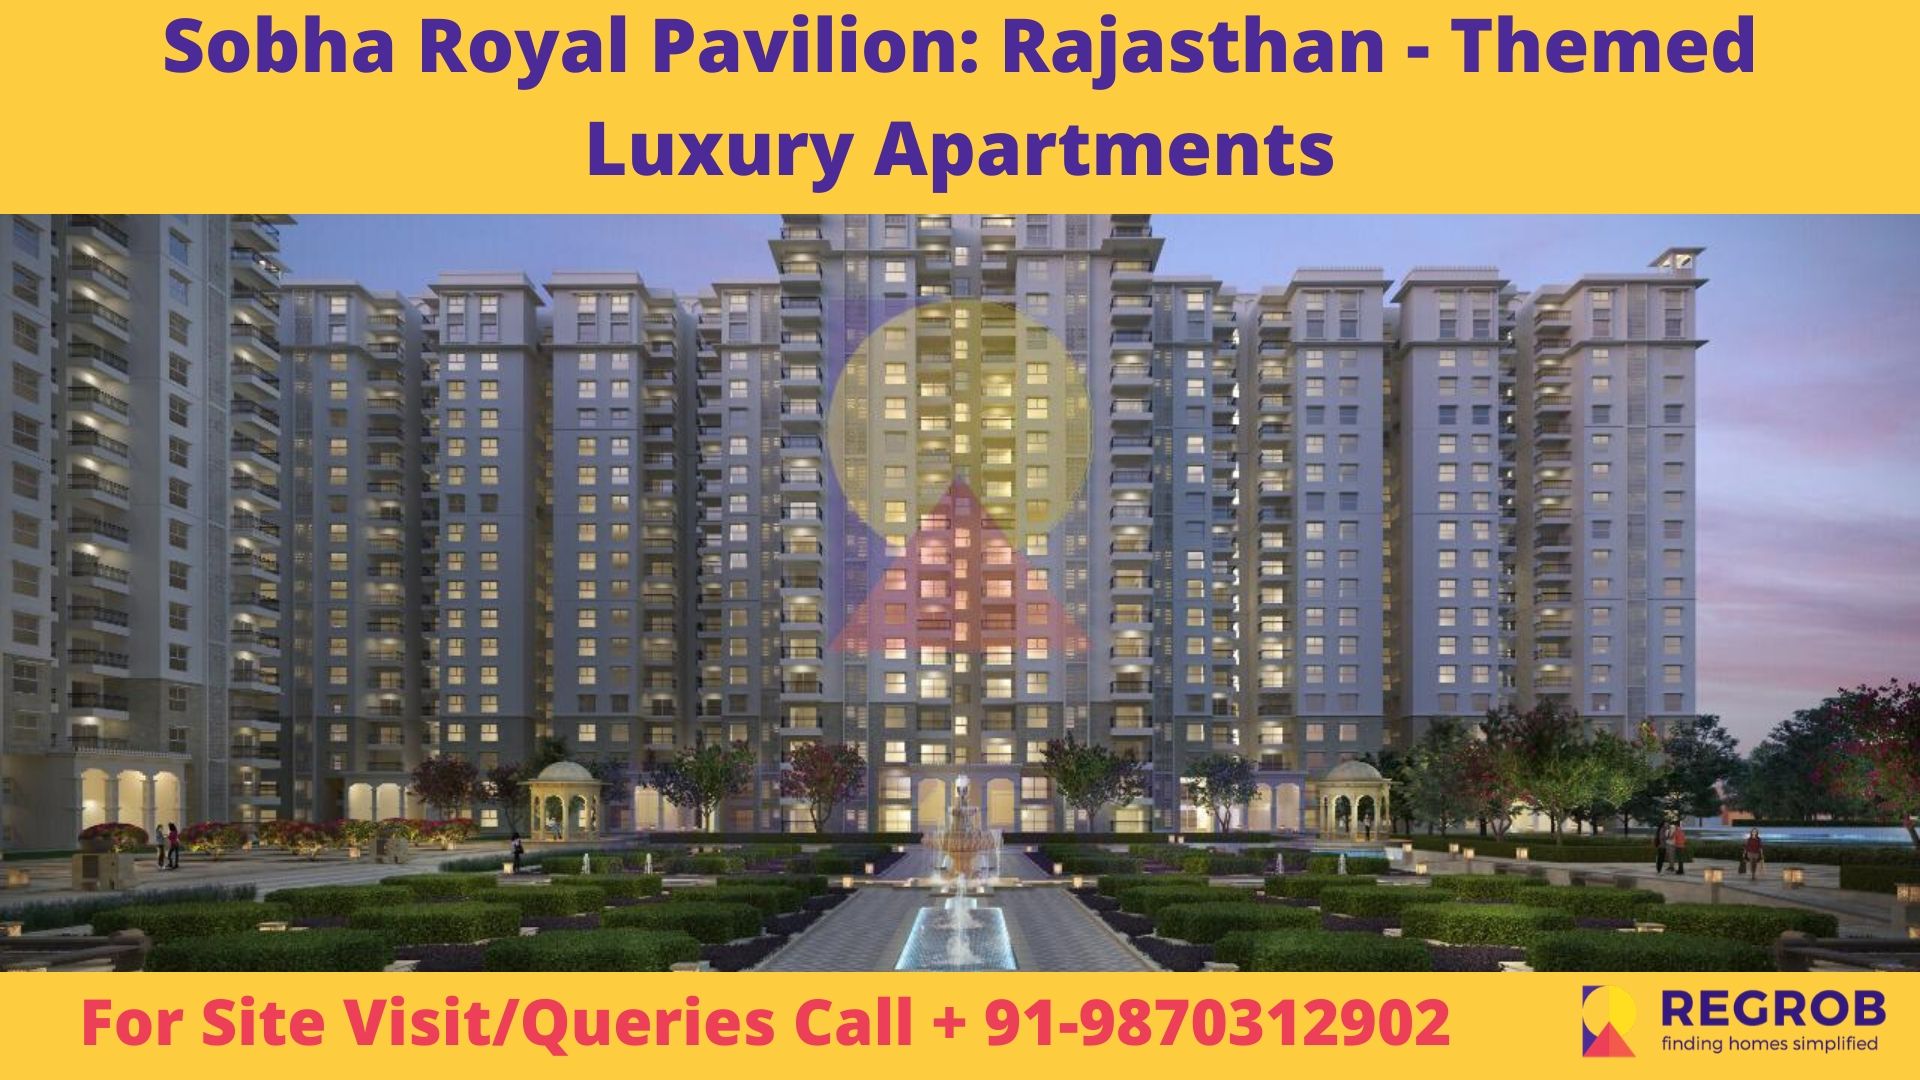 Sobha Royal Pavilion_ Rajasthan - Themed Luxury Apartments